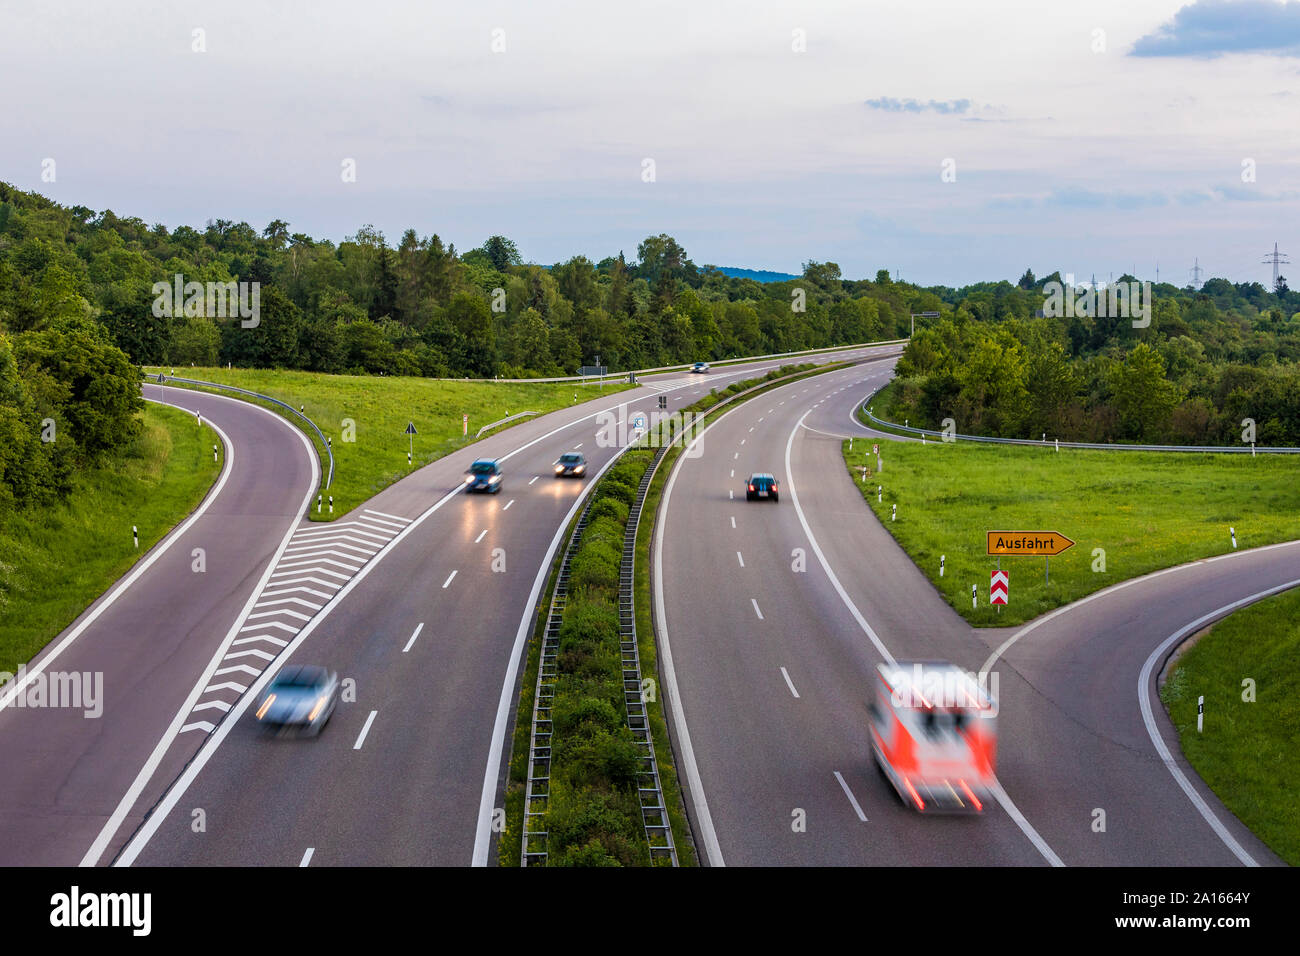 Germany, Baden-Wurttemberg, Traffic on highway Stock Photo